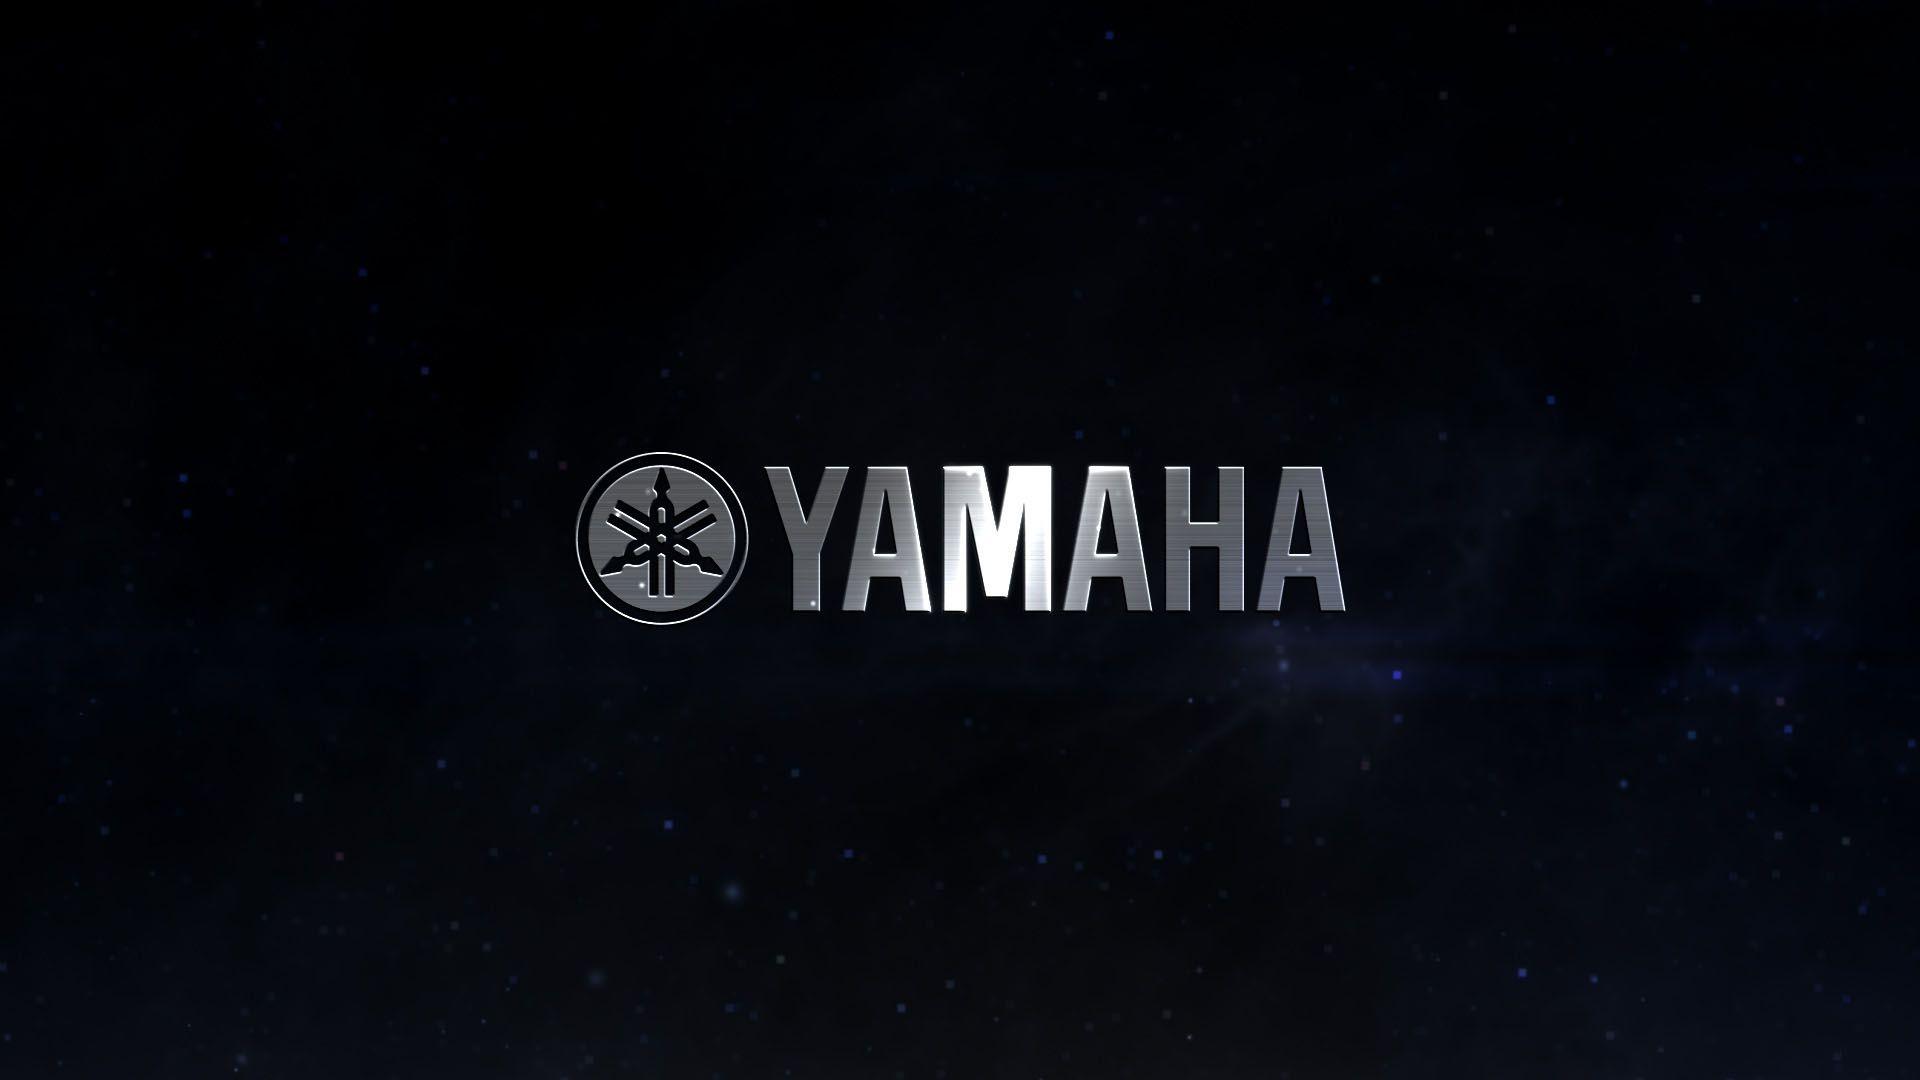 Yamaha Wallpaper. Wallpaper Yamaha. Wallpaper and Cars